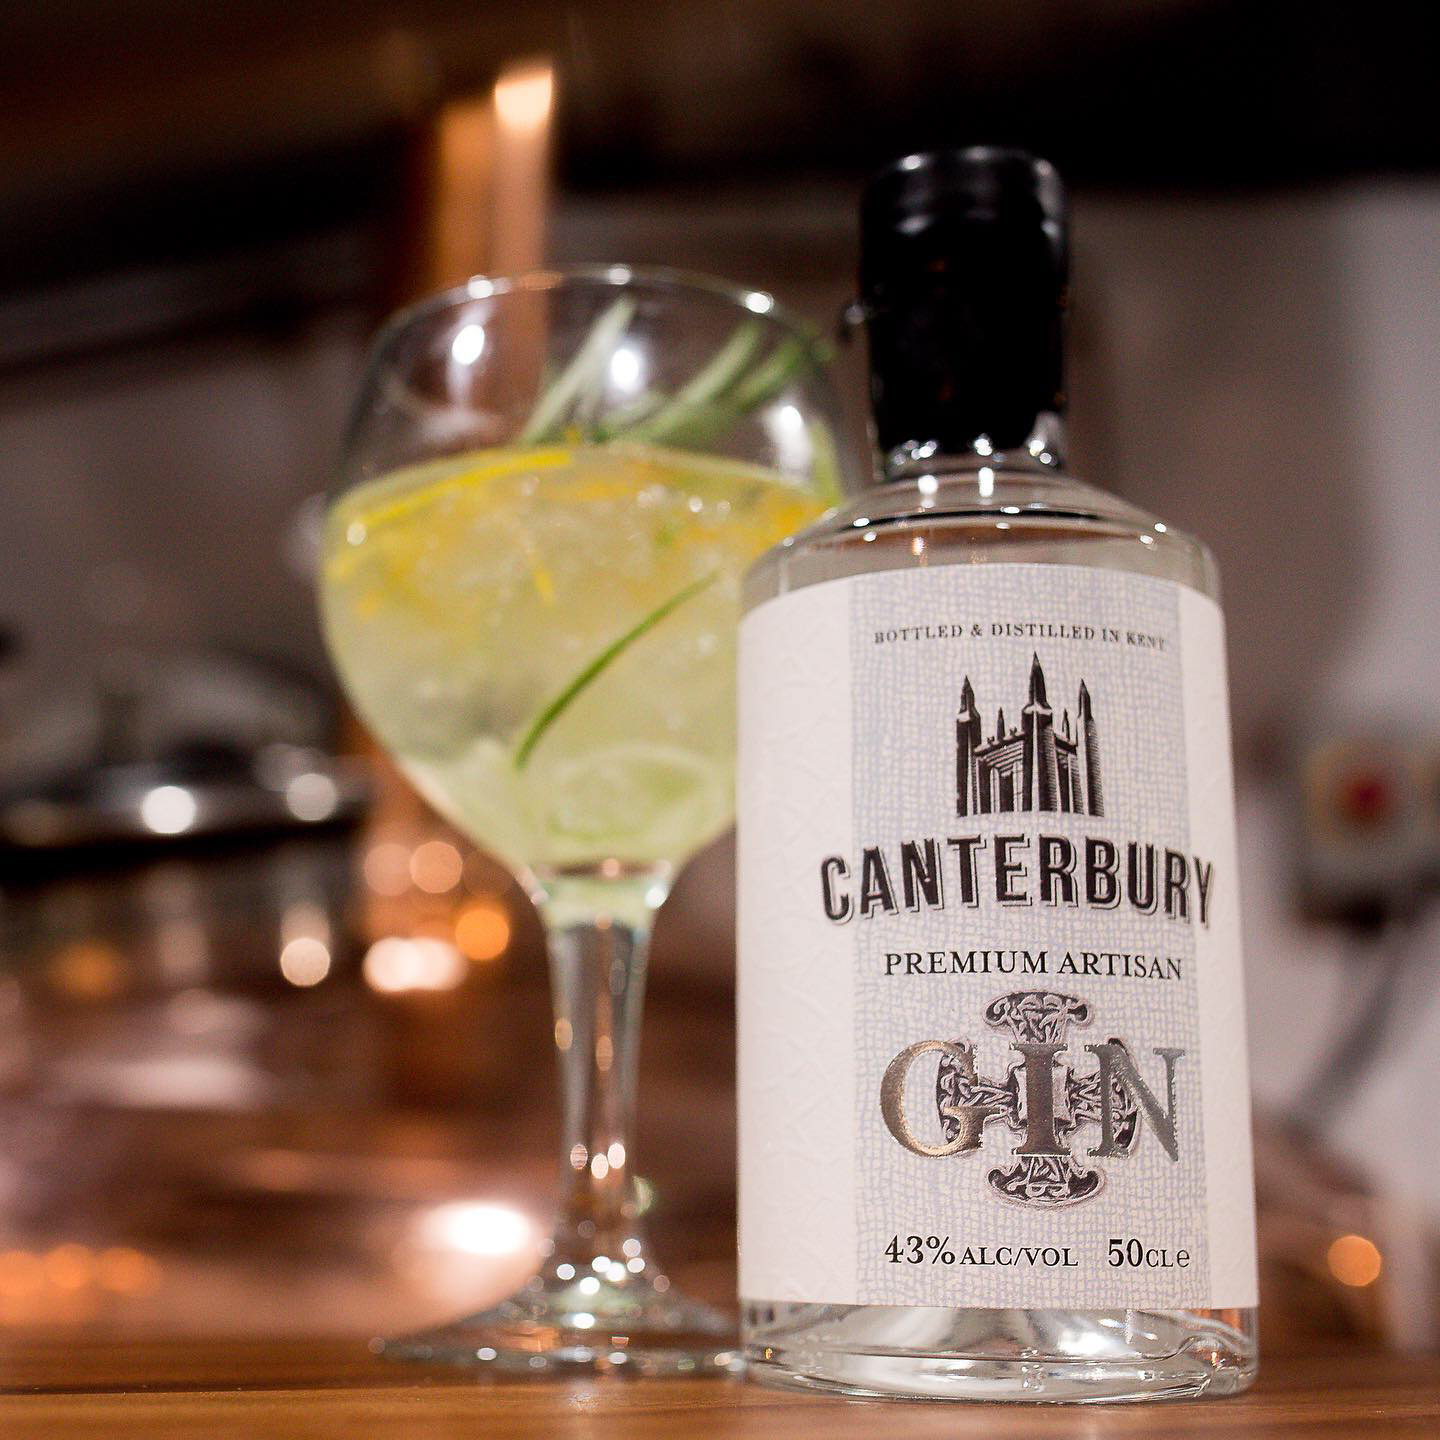 Canterbury Gin uses digital labels from Skanem